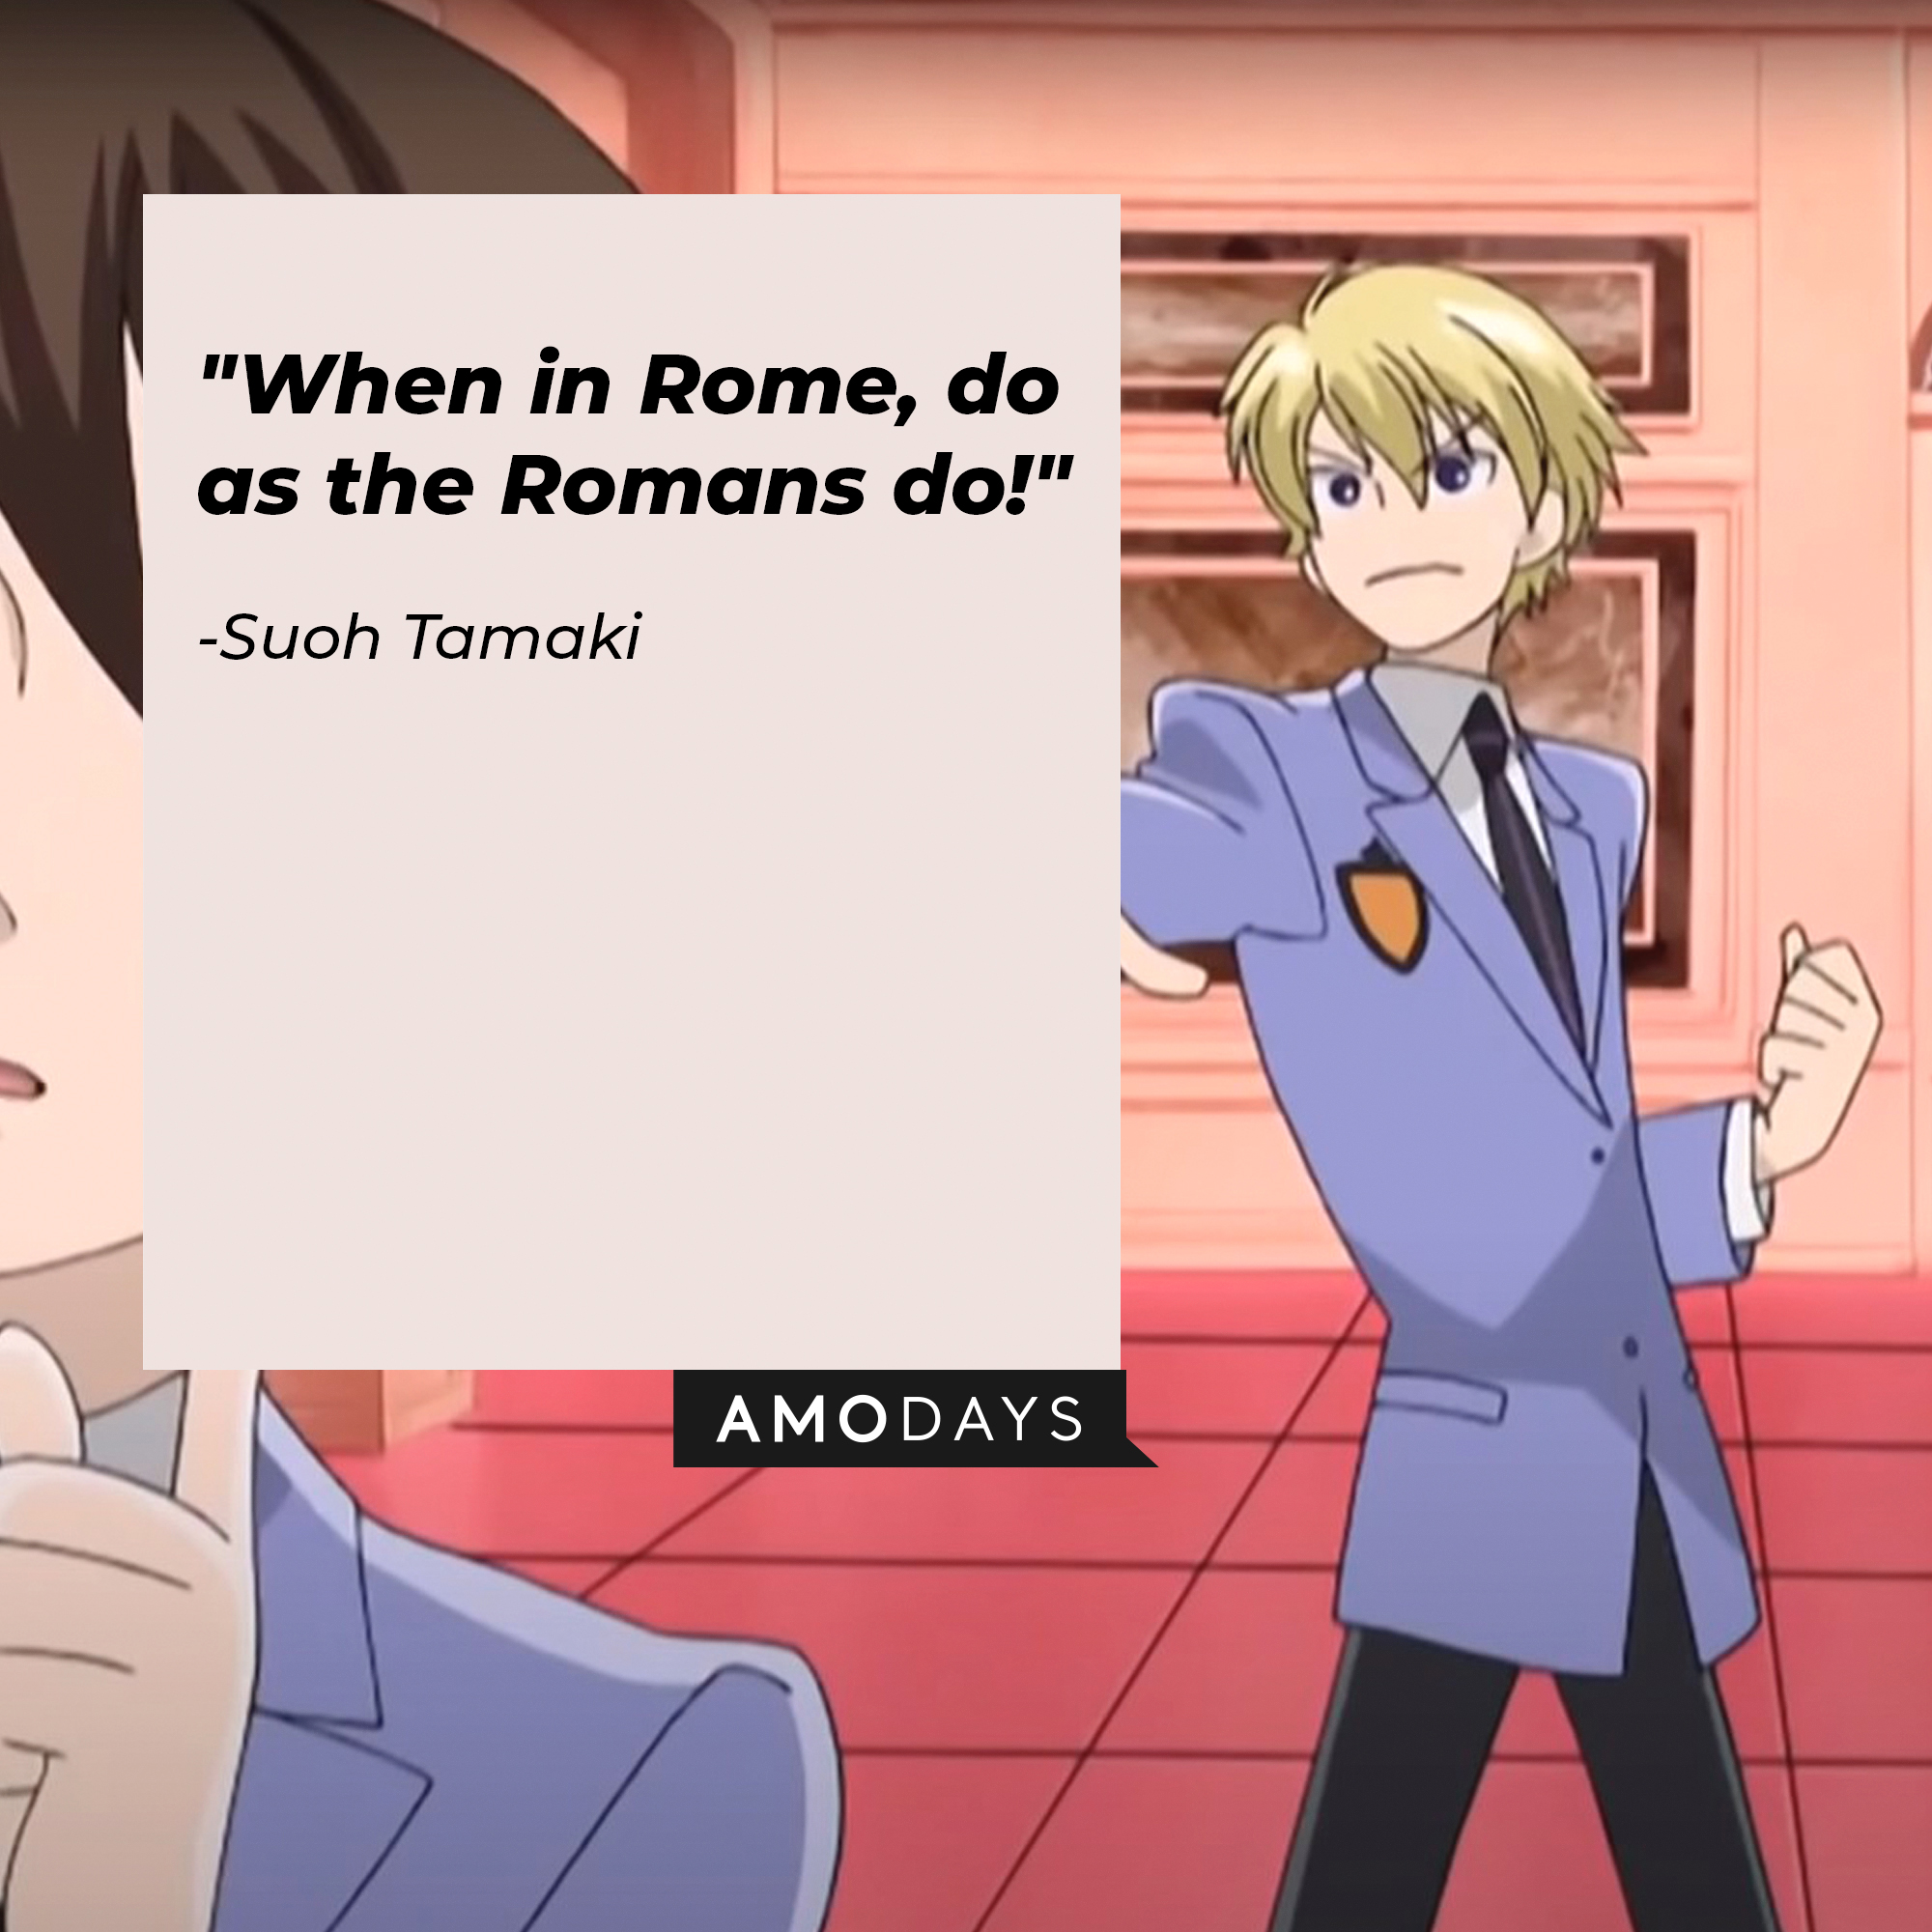 Suoh Tamaki's quote: "When in Rome, do as the Romans do!" | Source: Facebook.com/theouranhostclub